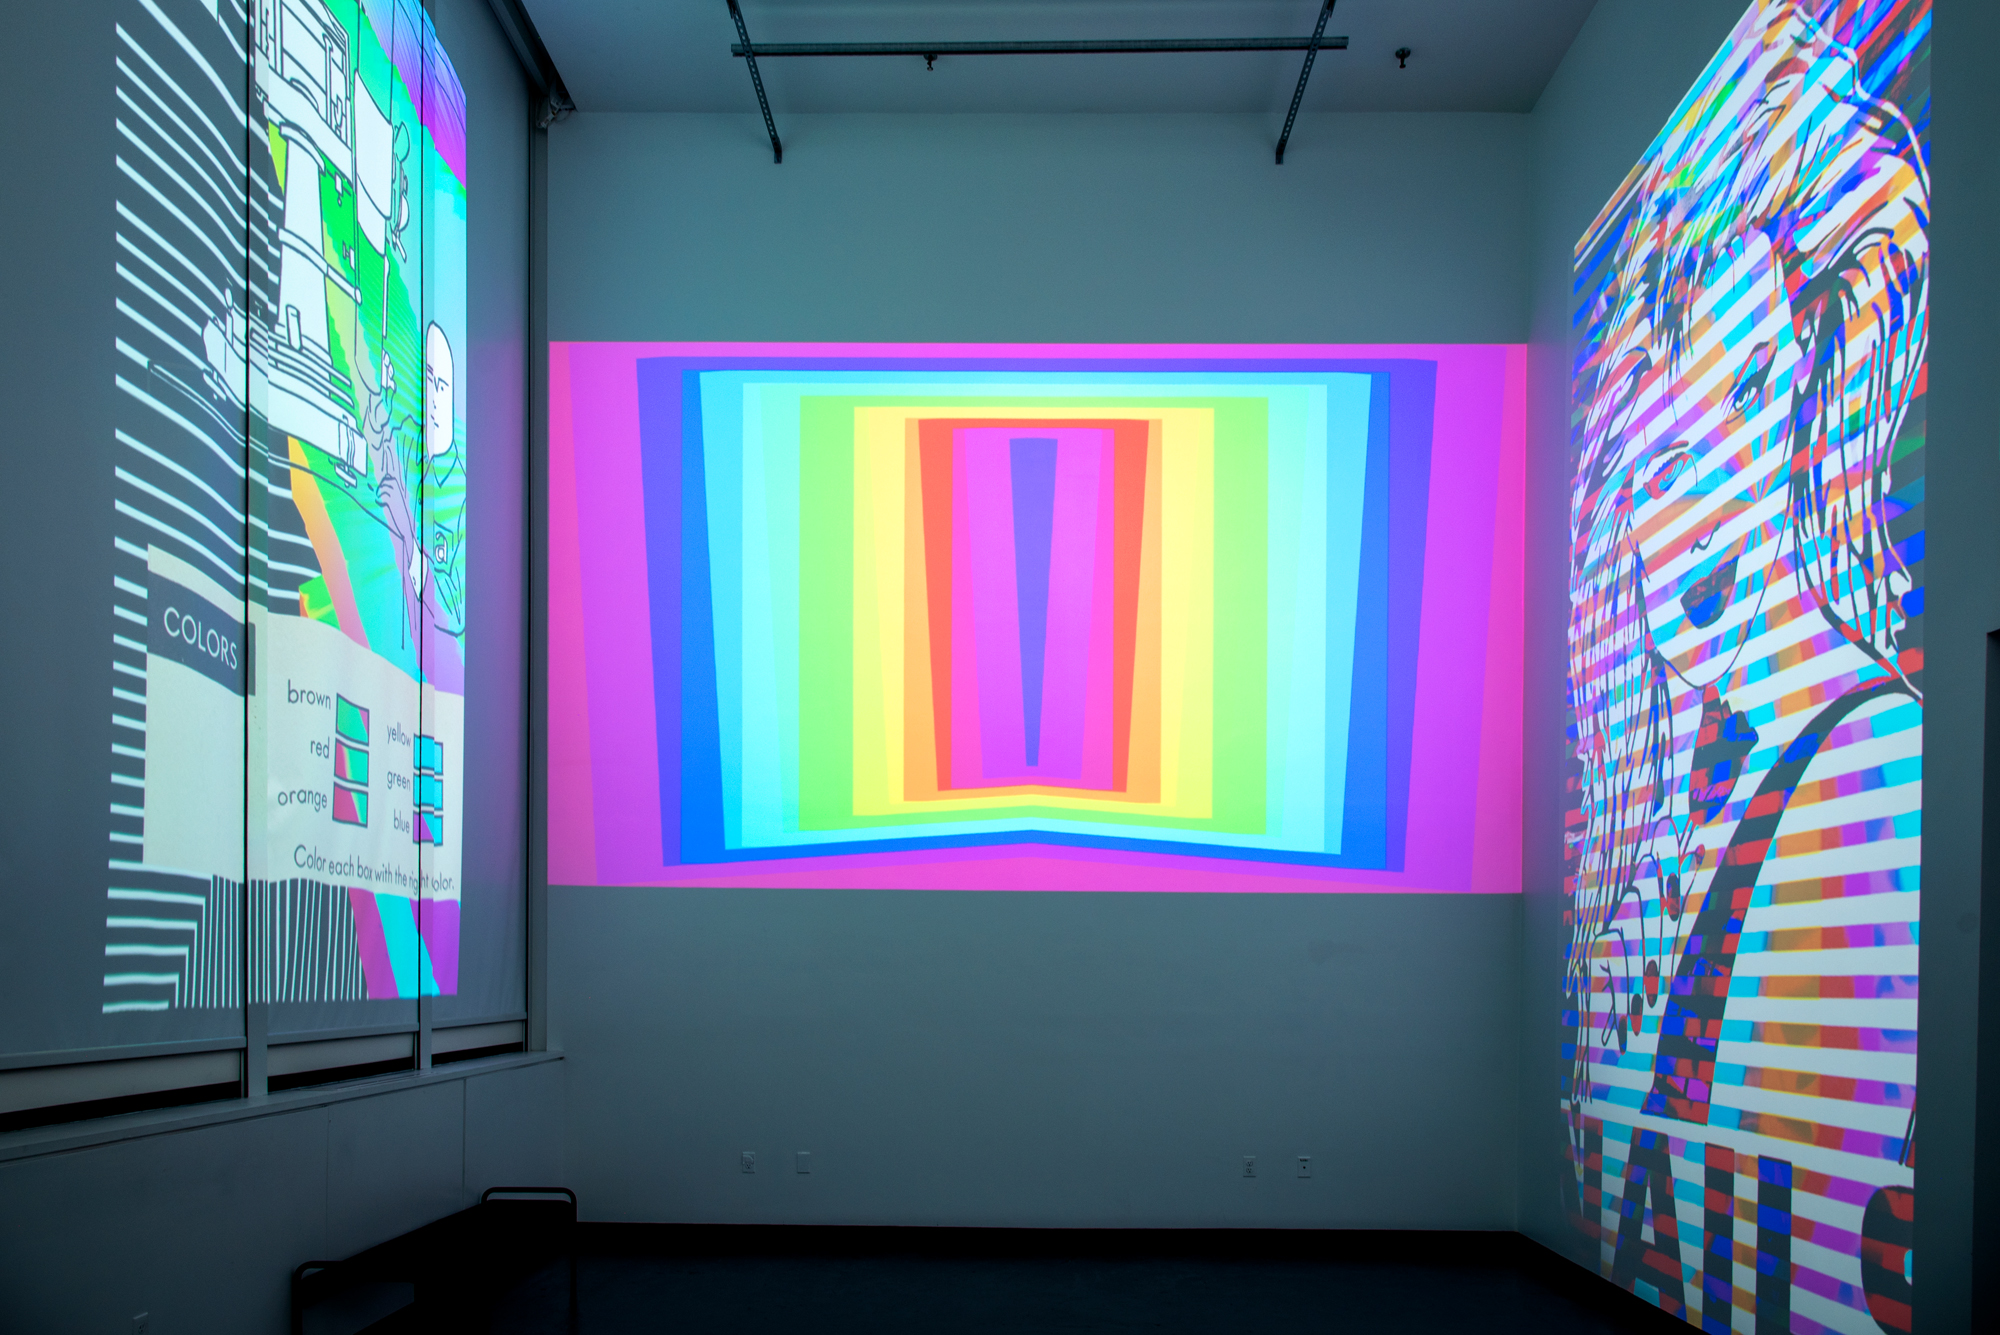 rainbow wall projection